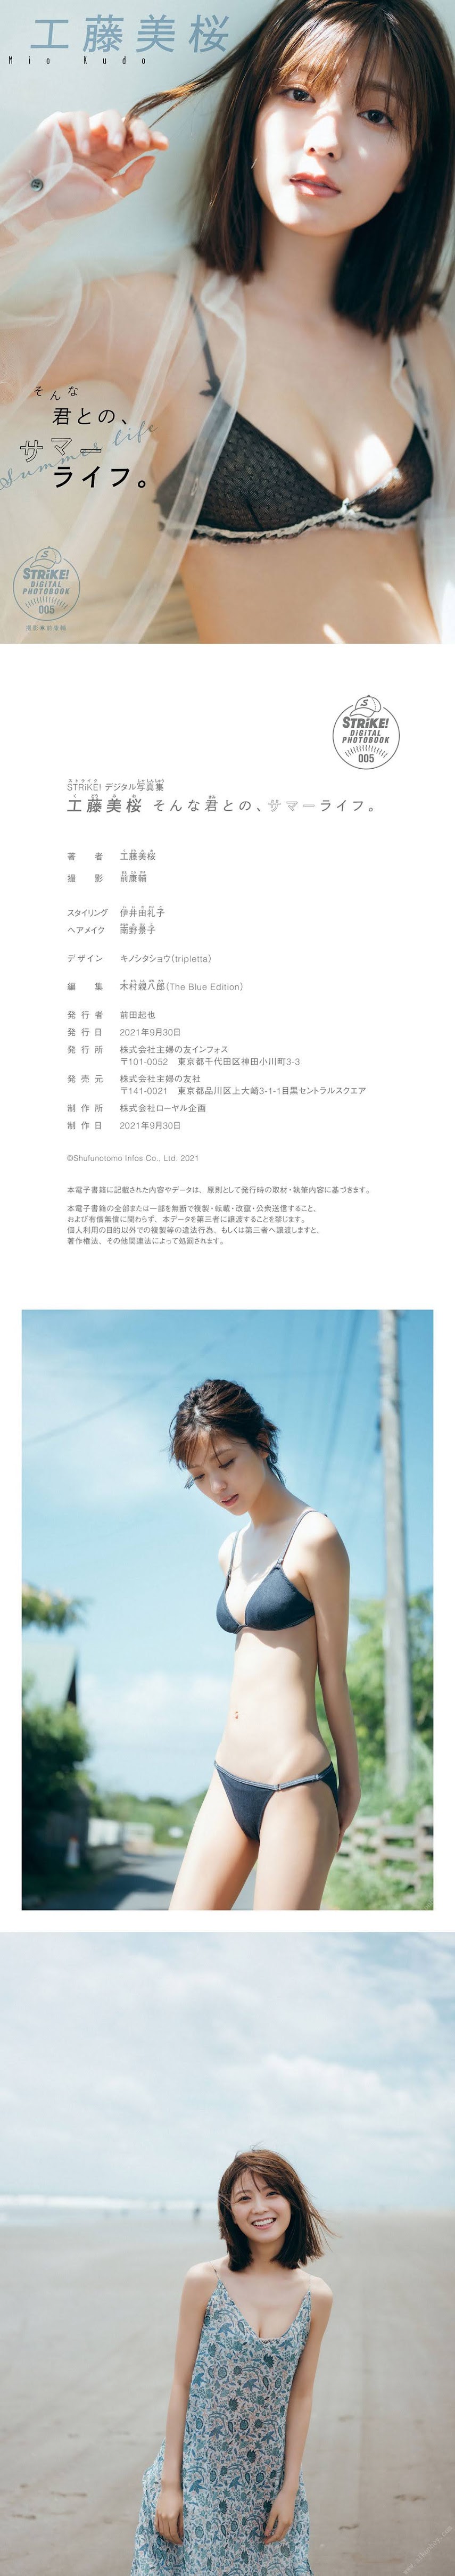 P214960.rar-jk- [Strike Digital Photobook] Mio Kudo 工藤美桜 - Summer life with you そんな君との、サマーライフ (2021-08-31)   P214960